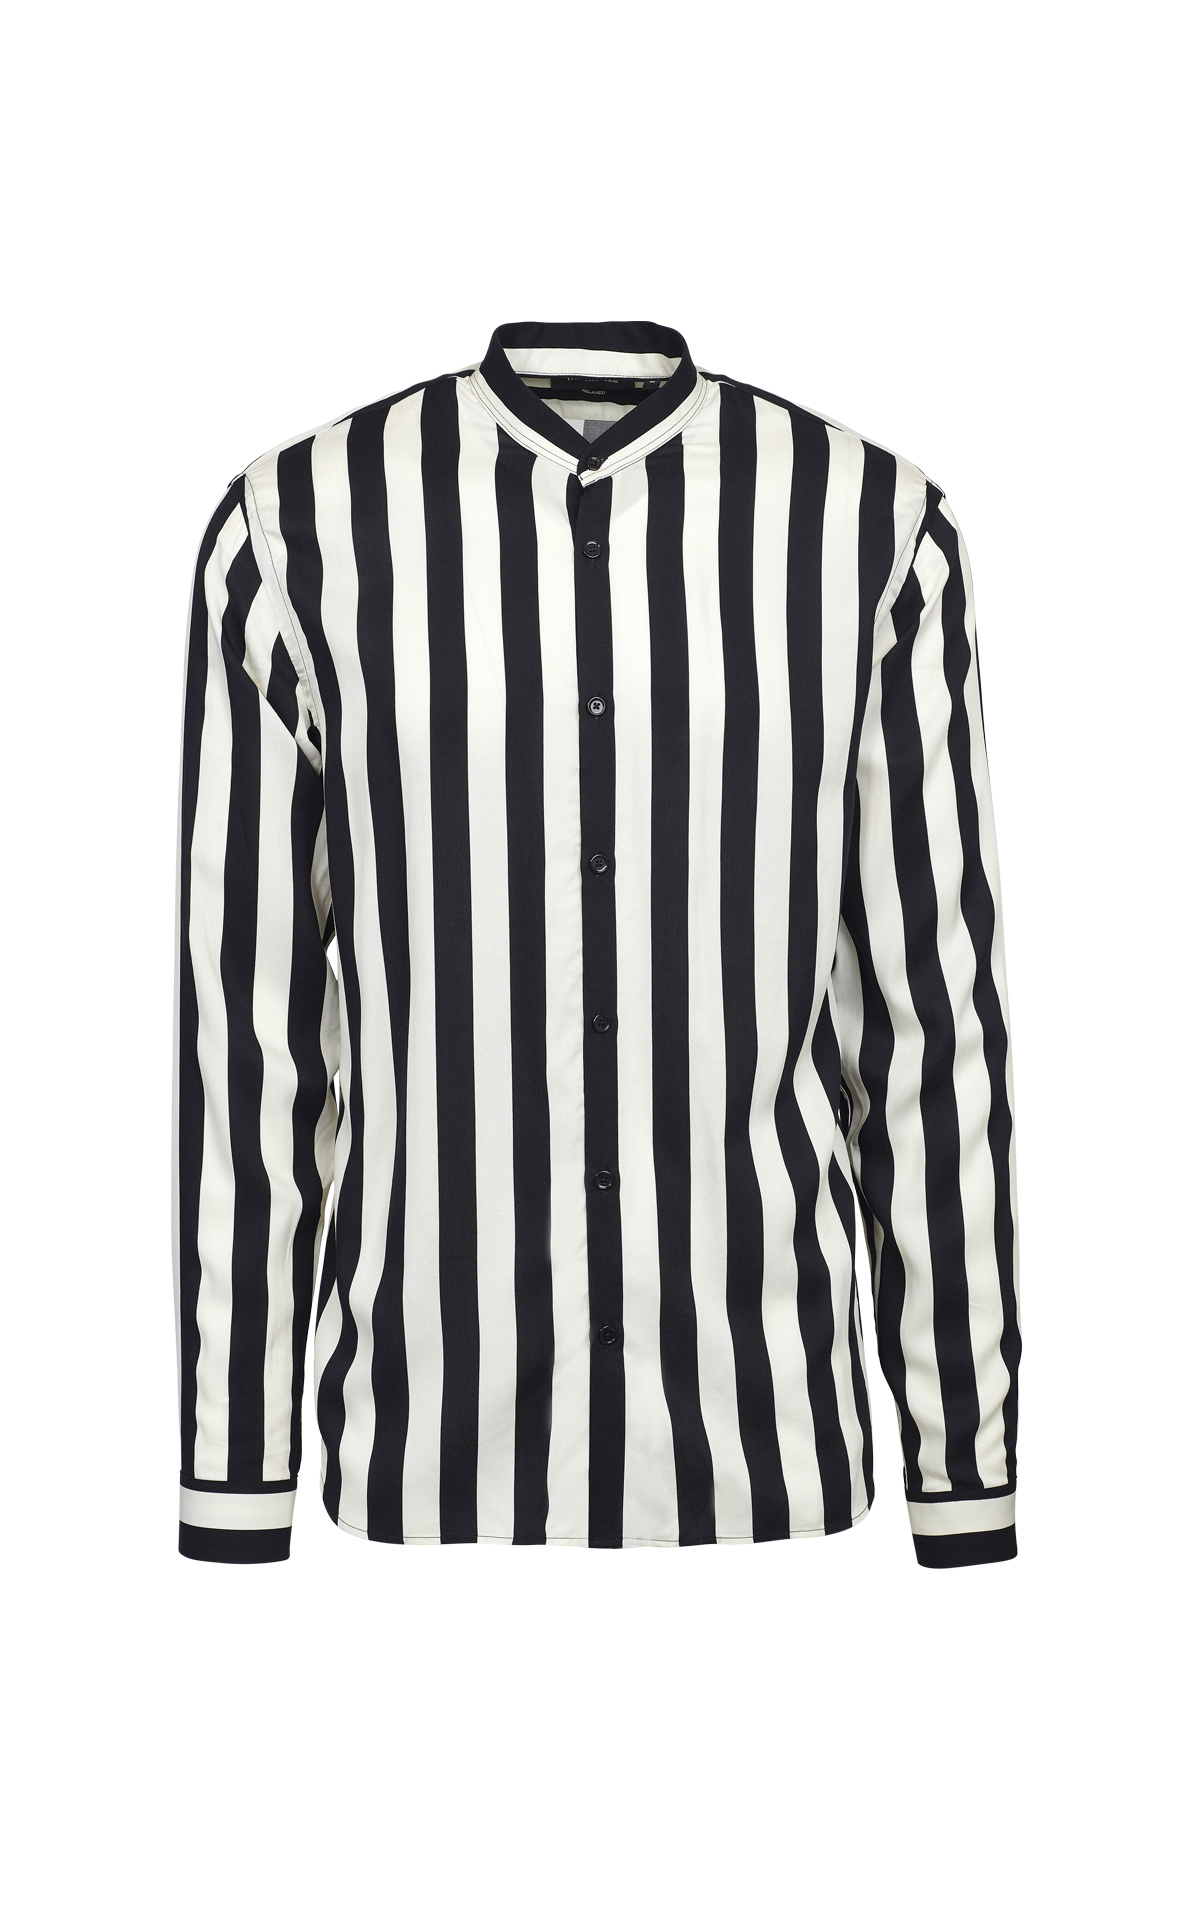 Black and white striped shirt shirt